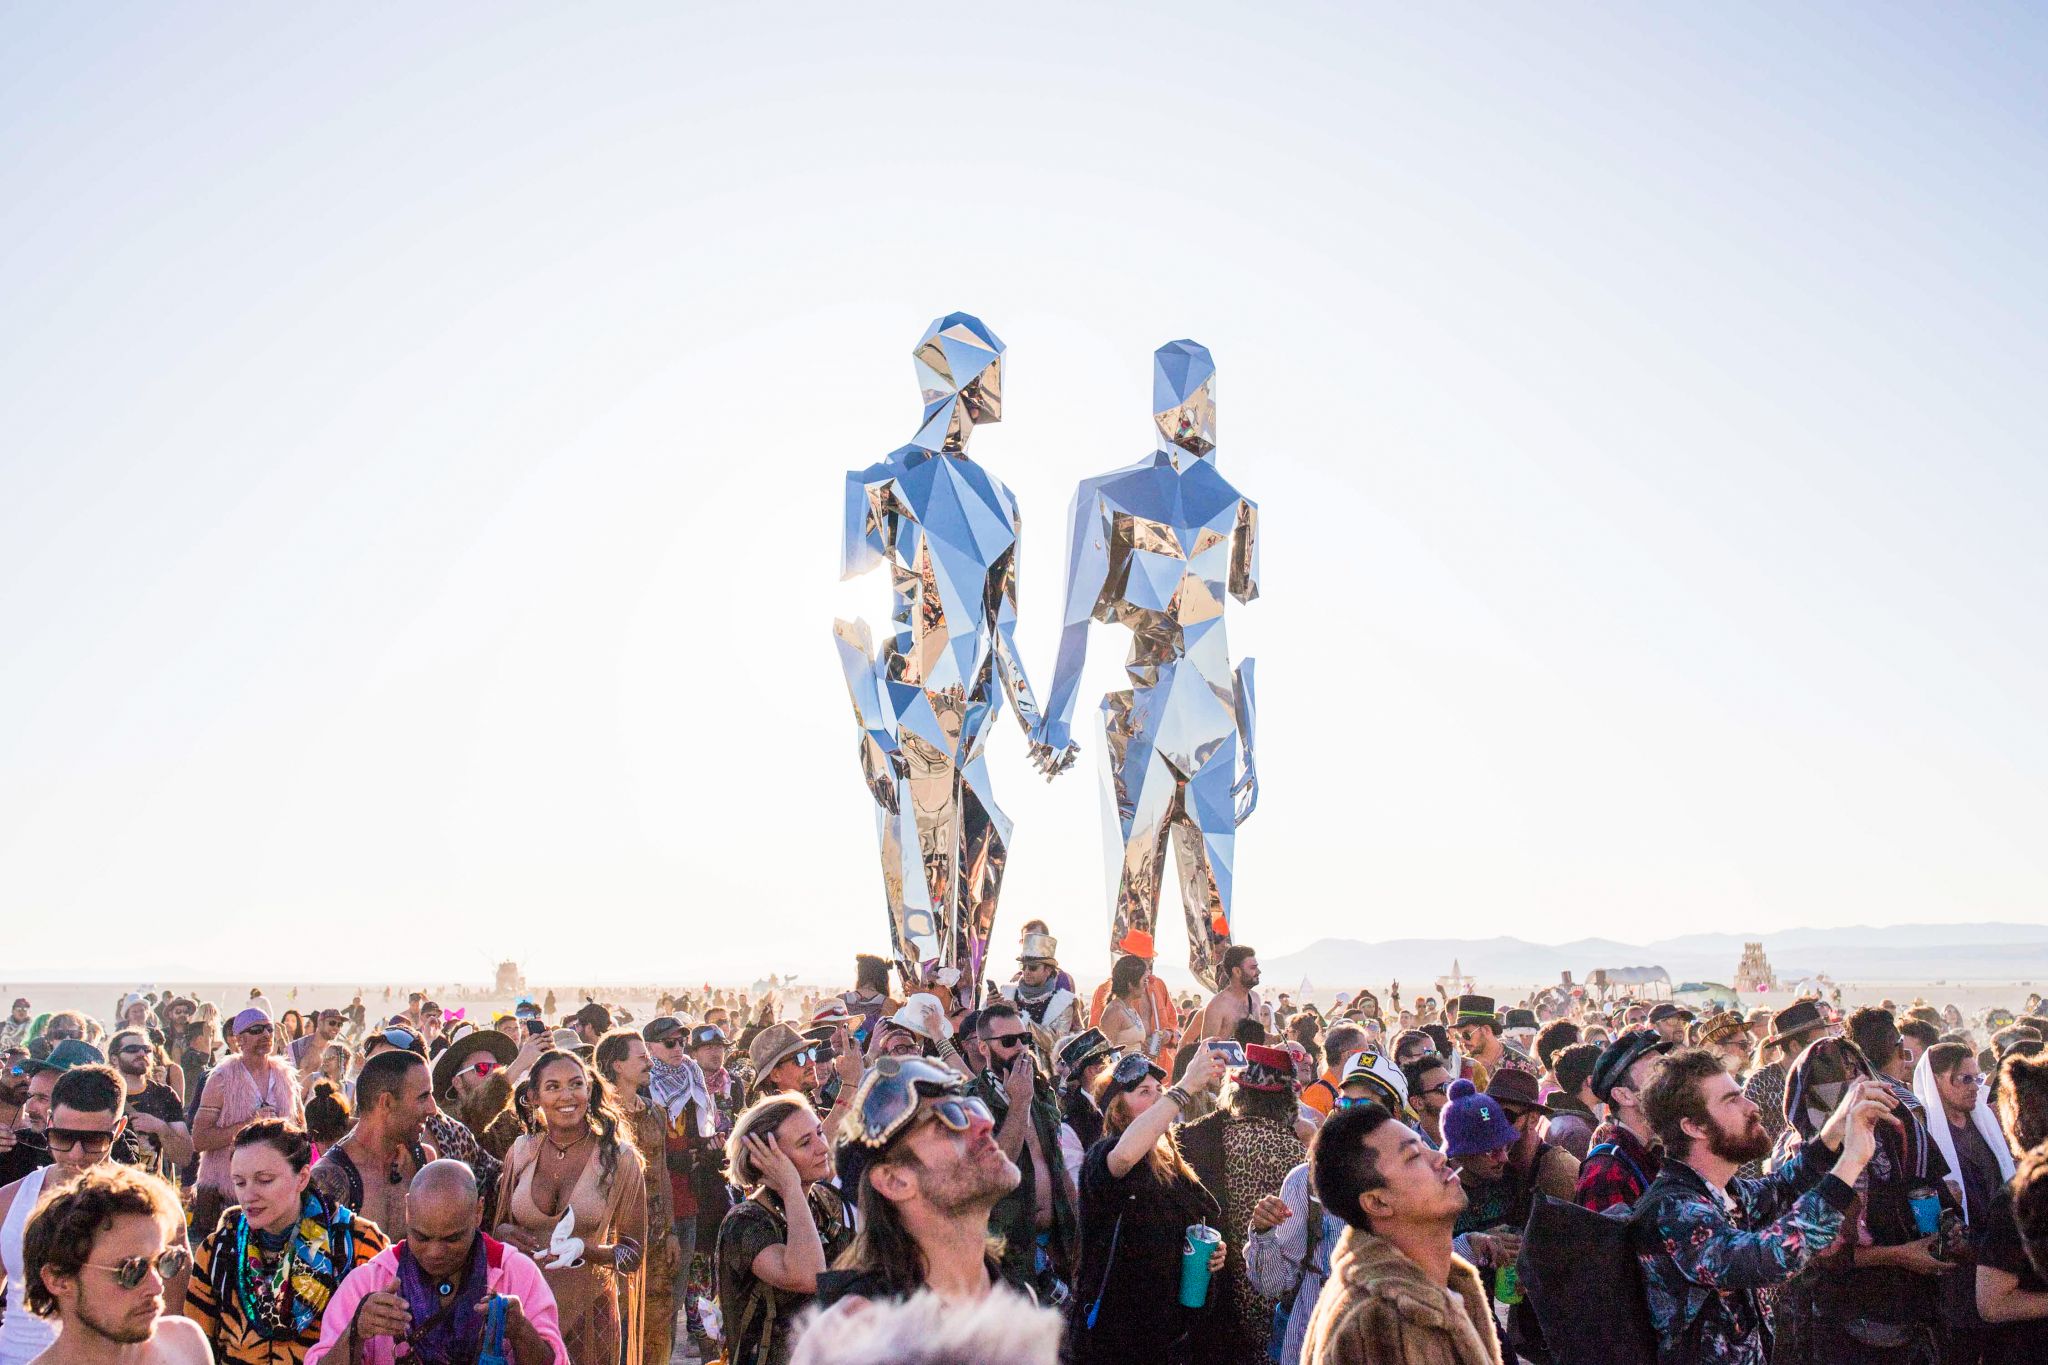 Burning Man announces ticket sale details for 2022